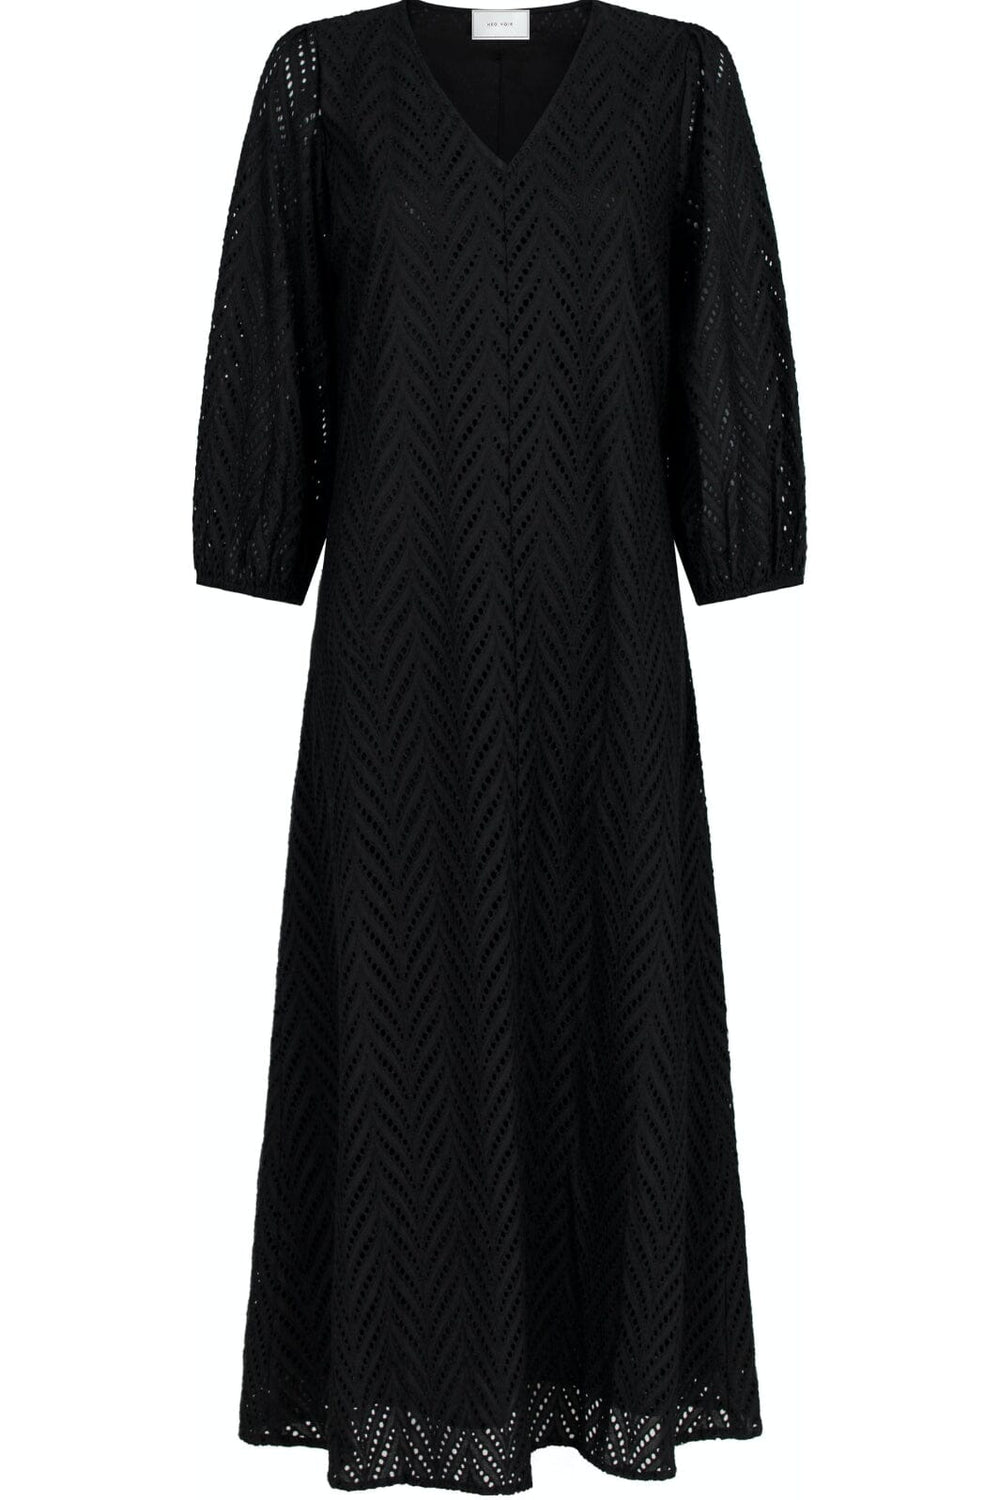 Neo Noir - Halfina Wave Dress - Black Kjoler 